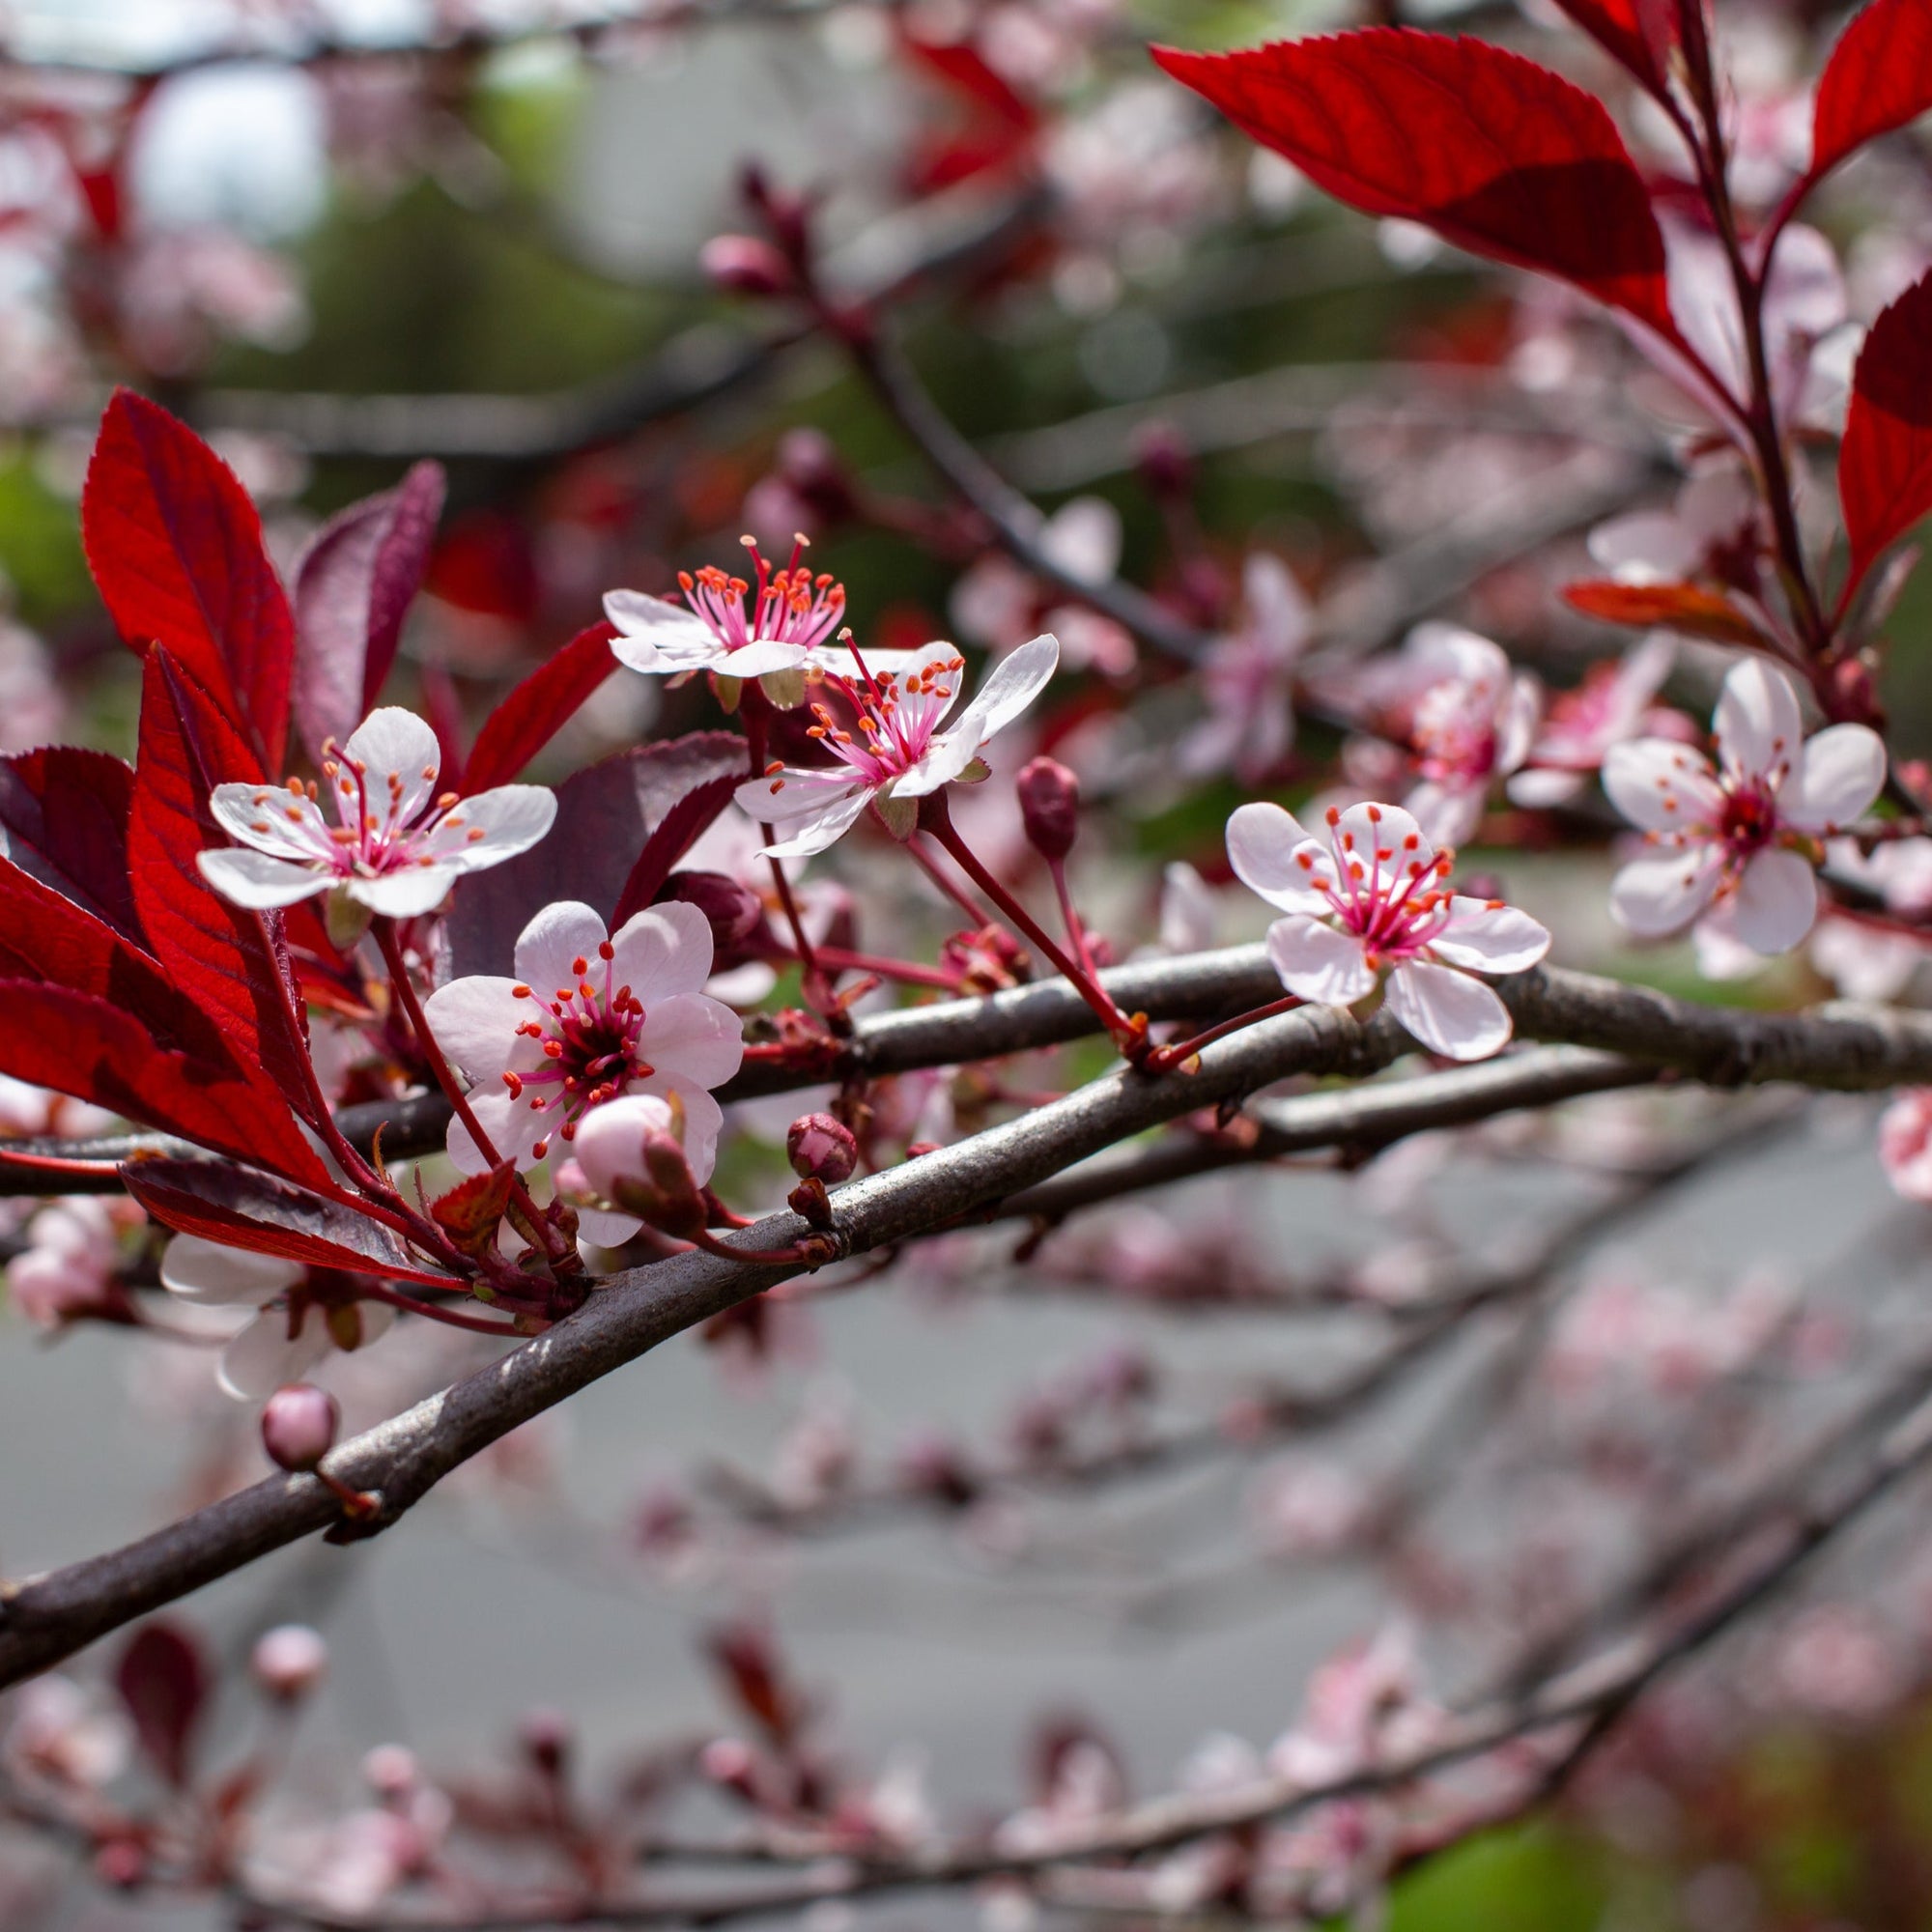 Dwarf/Patio Ornamental Flowering Cherry Blossom Tree - 'Cistena' 100-120cm